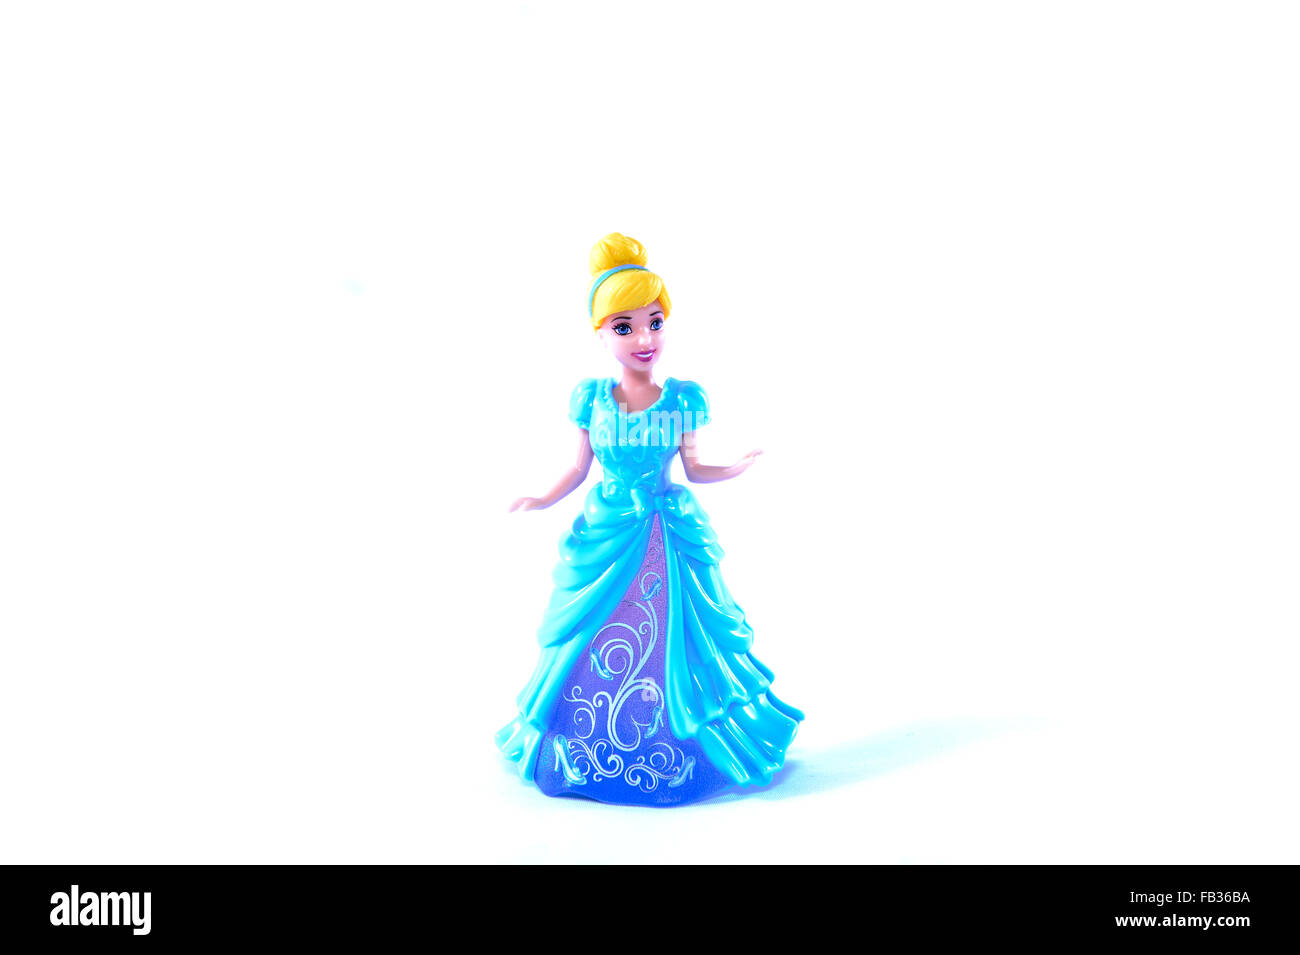 Disney Princess MagiClip Cinderella Toy Doll Stock Photo